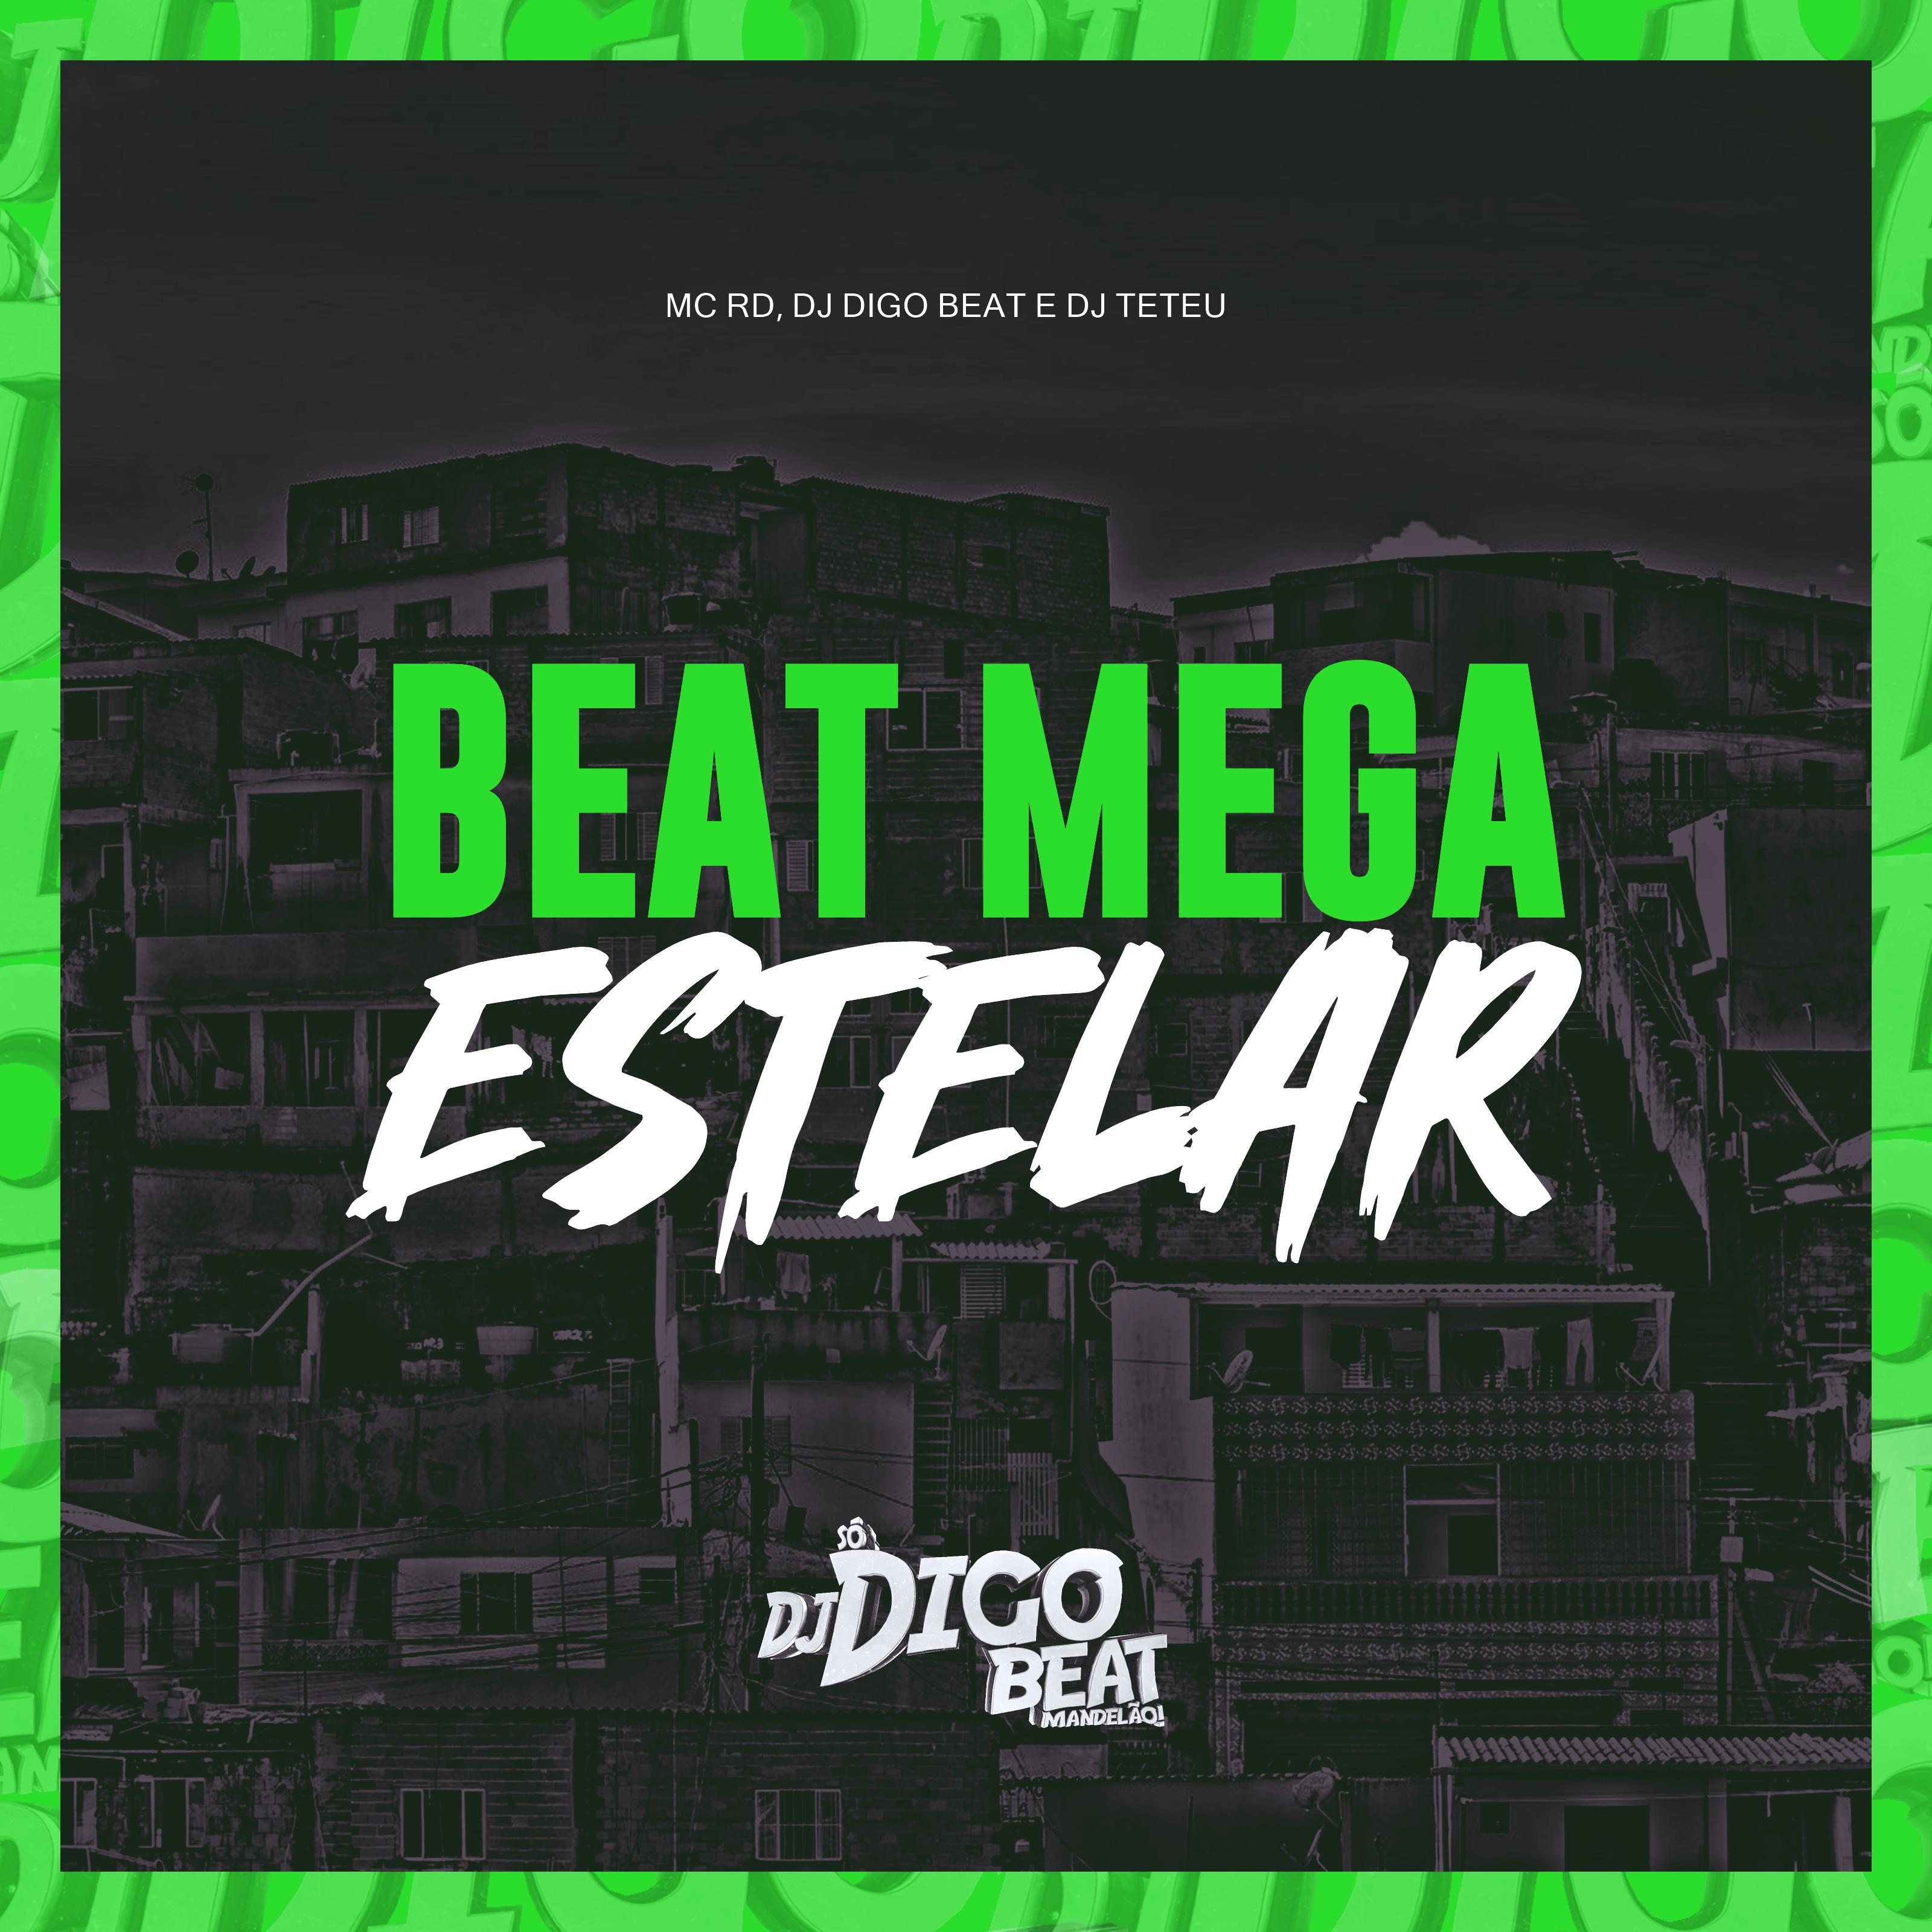 DJ Digo Beat - Beat Mega Estelar